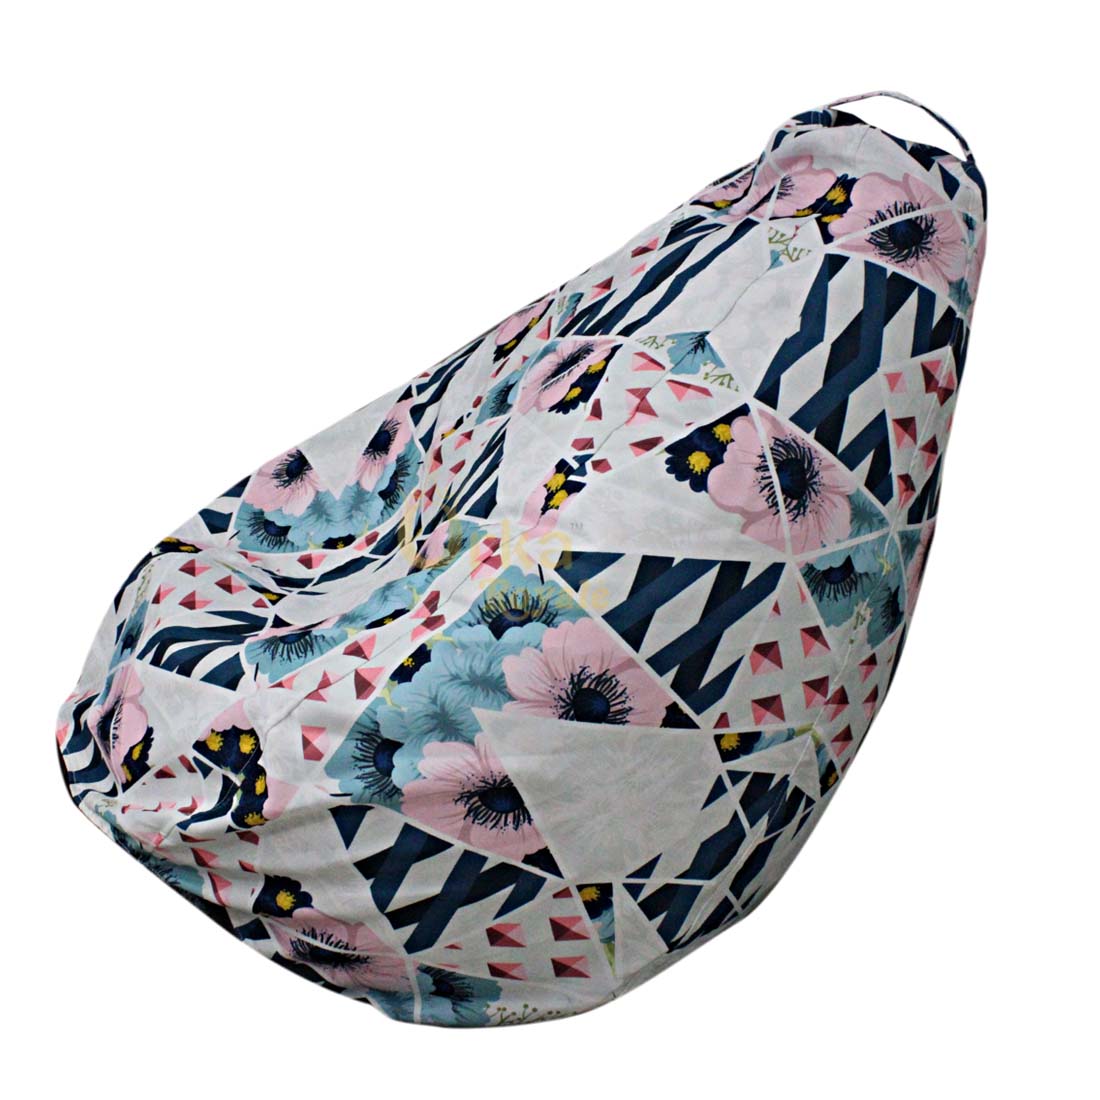 Orka Royale Digital Printed Flower Design Bean Bag